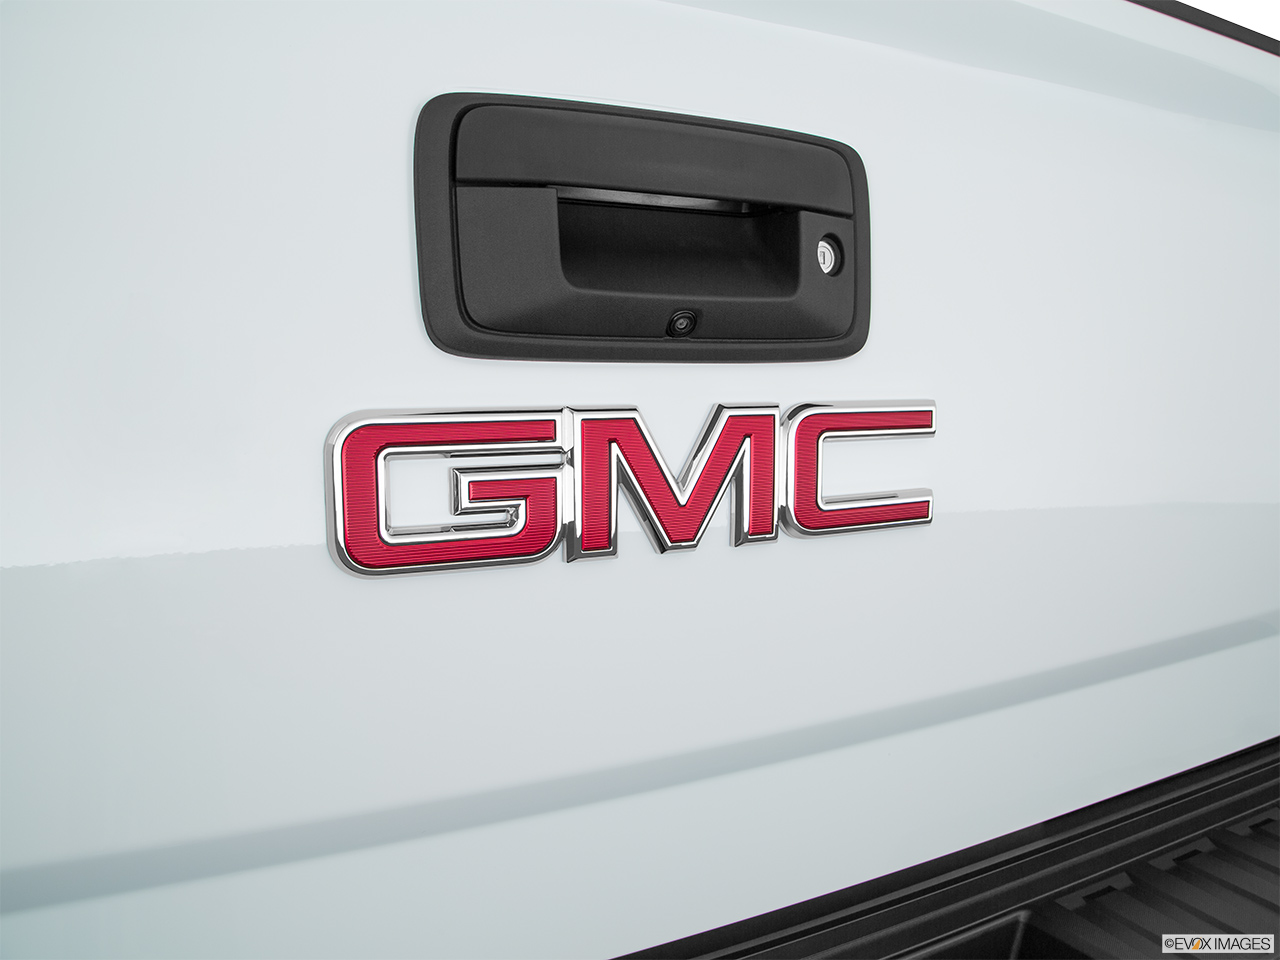 2017 GMC Sierra 3500 HD Base Rear manufacture badge/emblem 